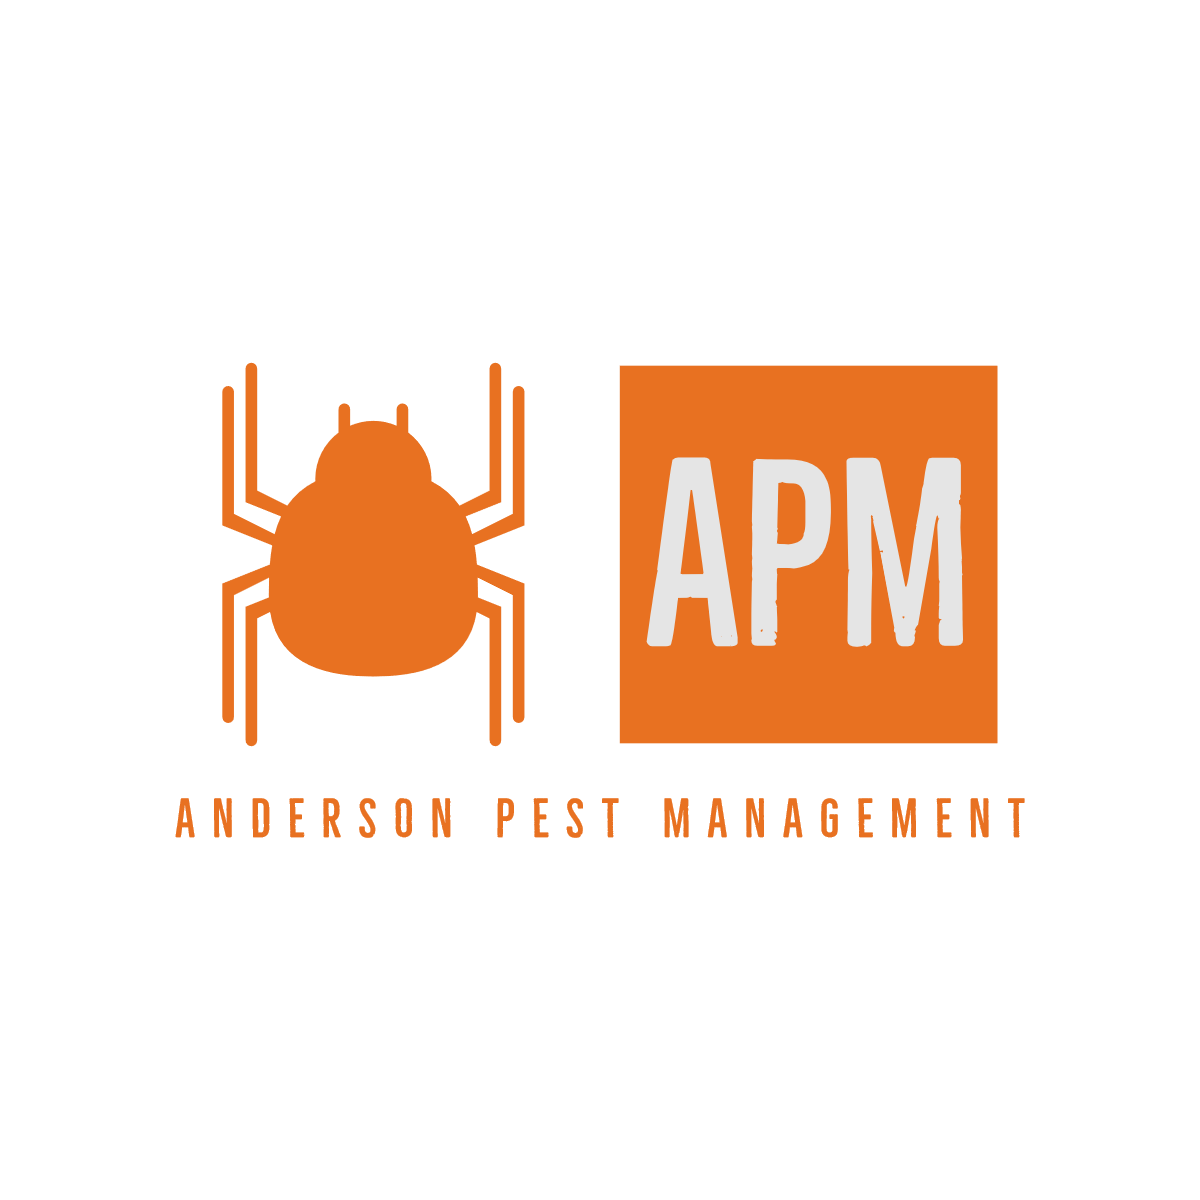 Anderson Pest Management